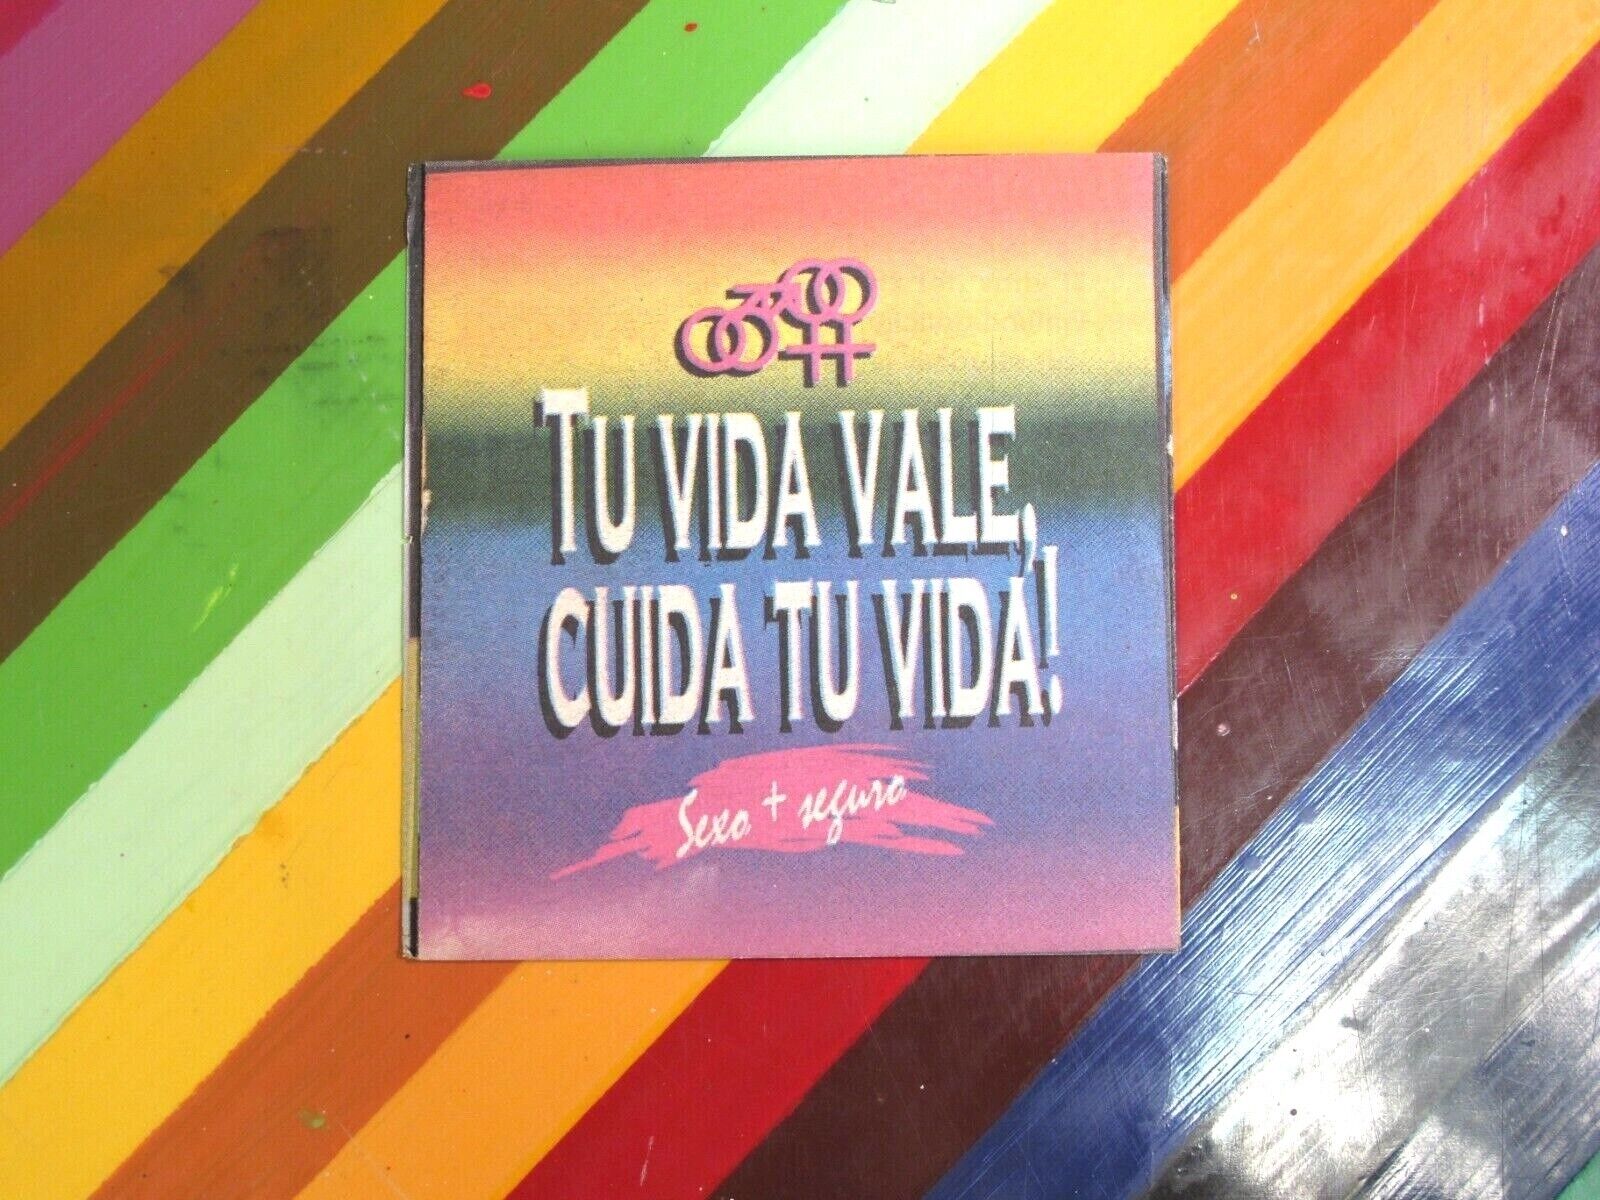 vtg gay ephemera flyer - Cuida Tu Vida Spanish foldout AIDS HIV prevention